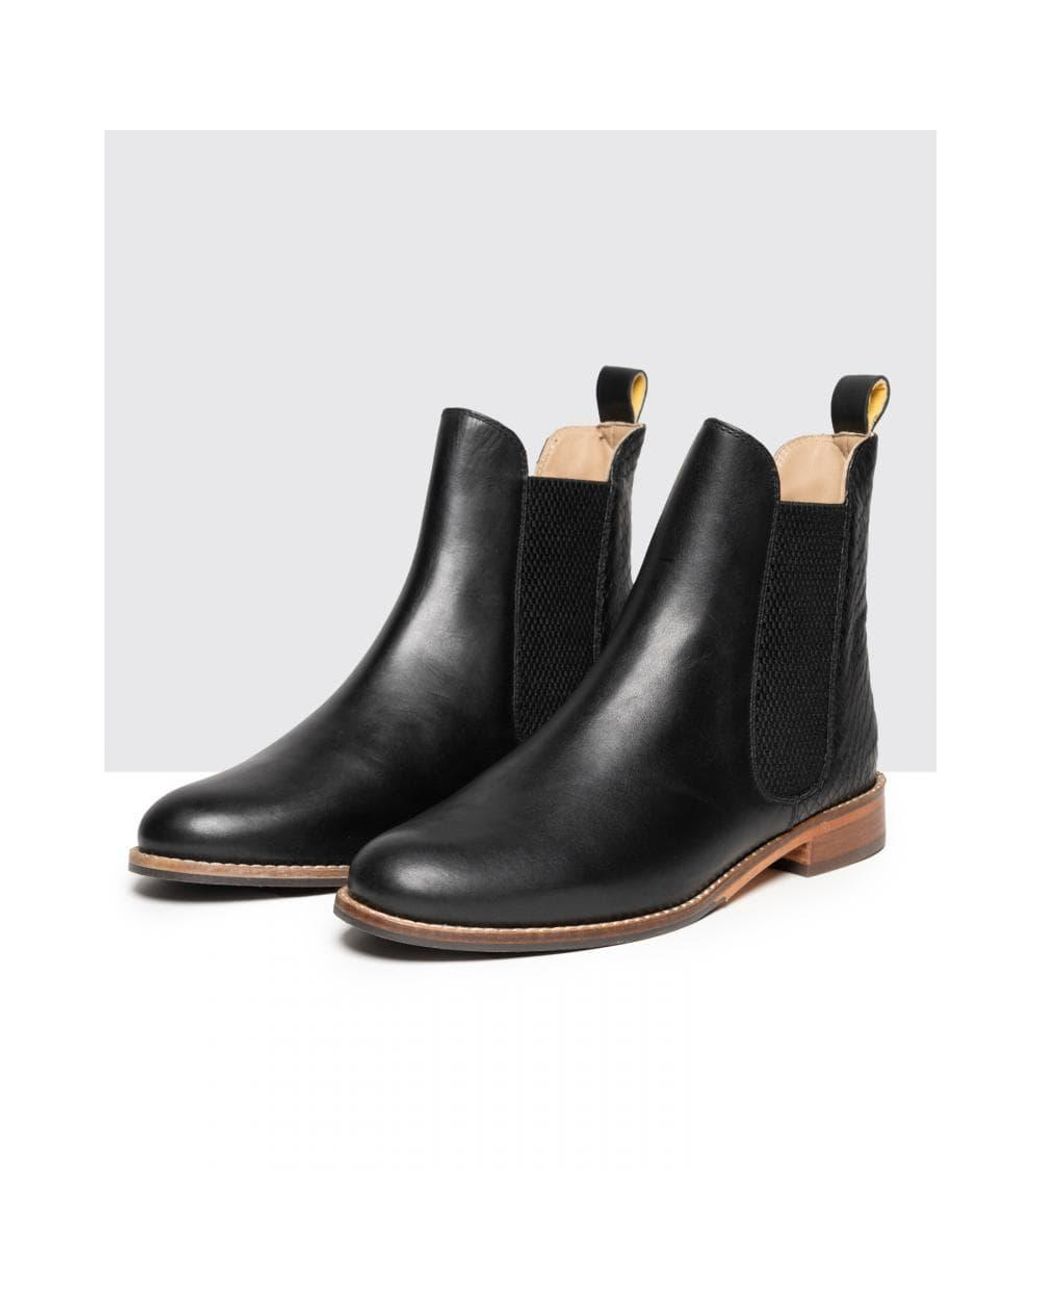 Joules Westbourne Premium Chelsea Boots in Black | Lyst Australia